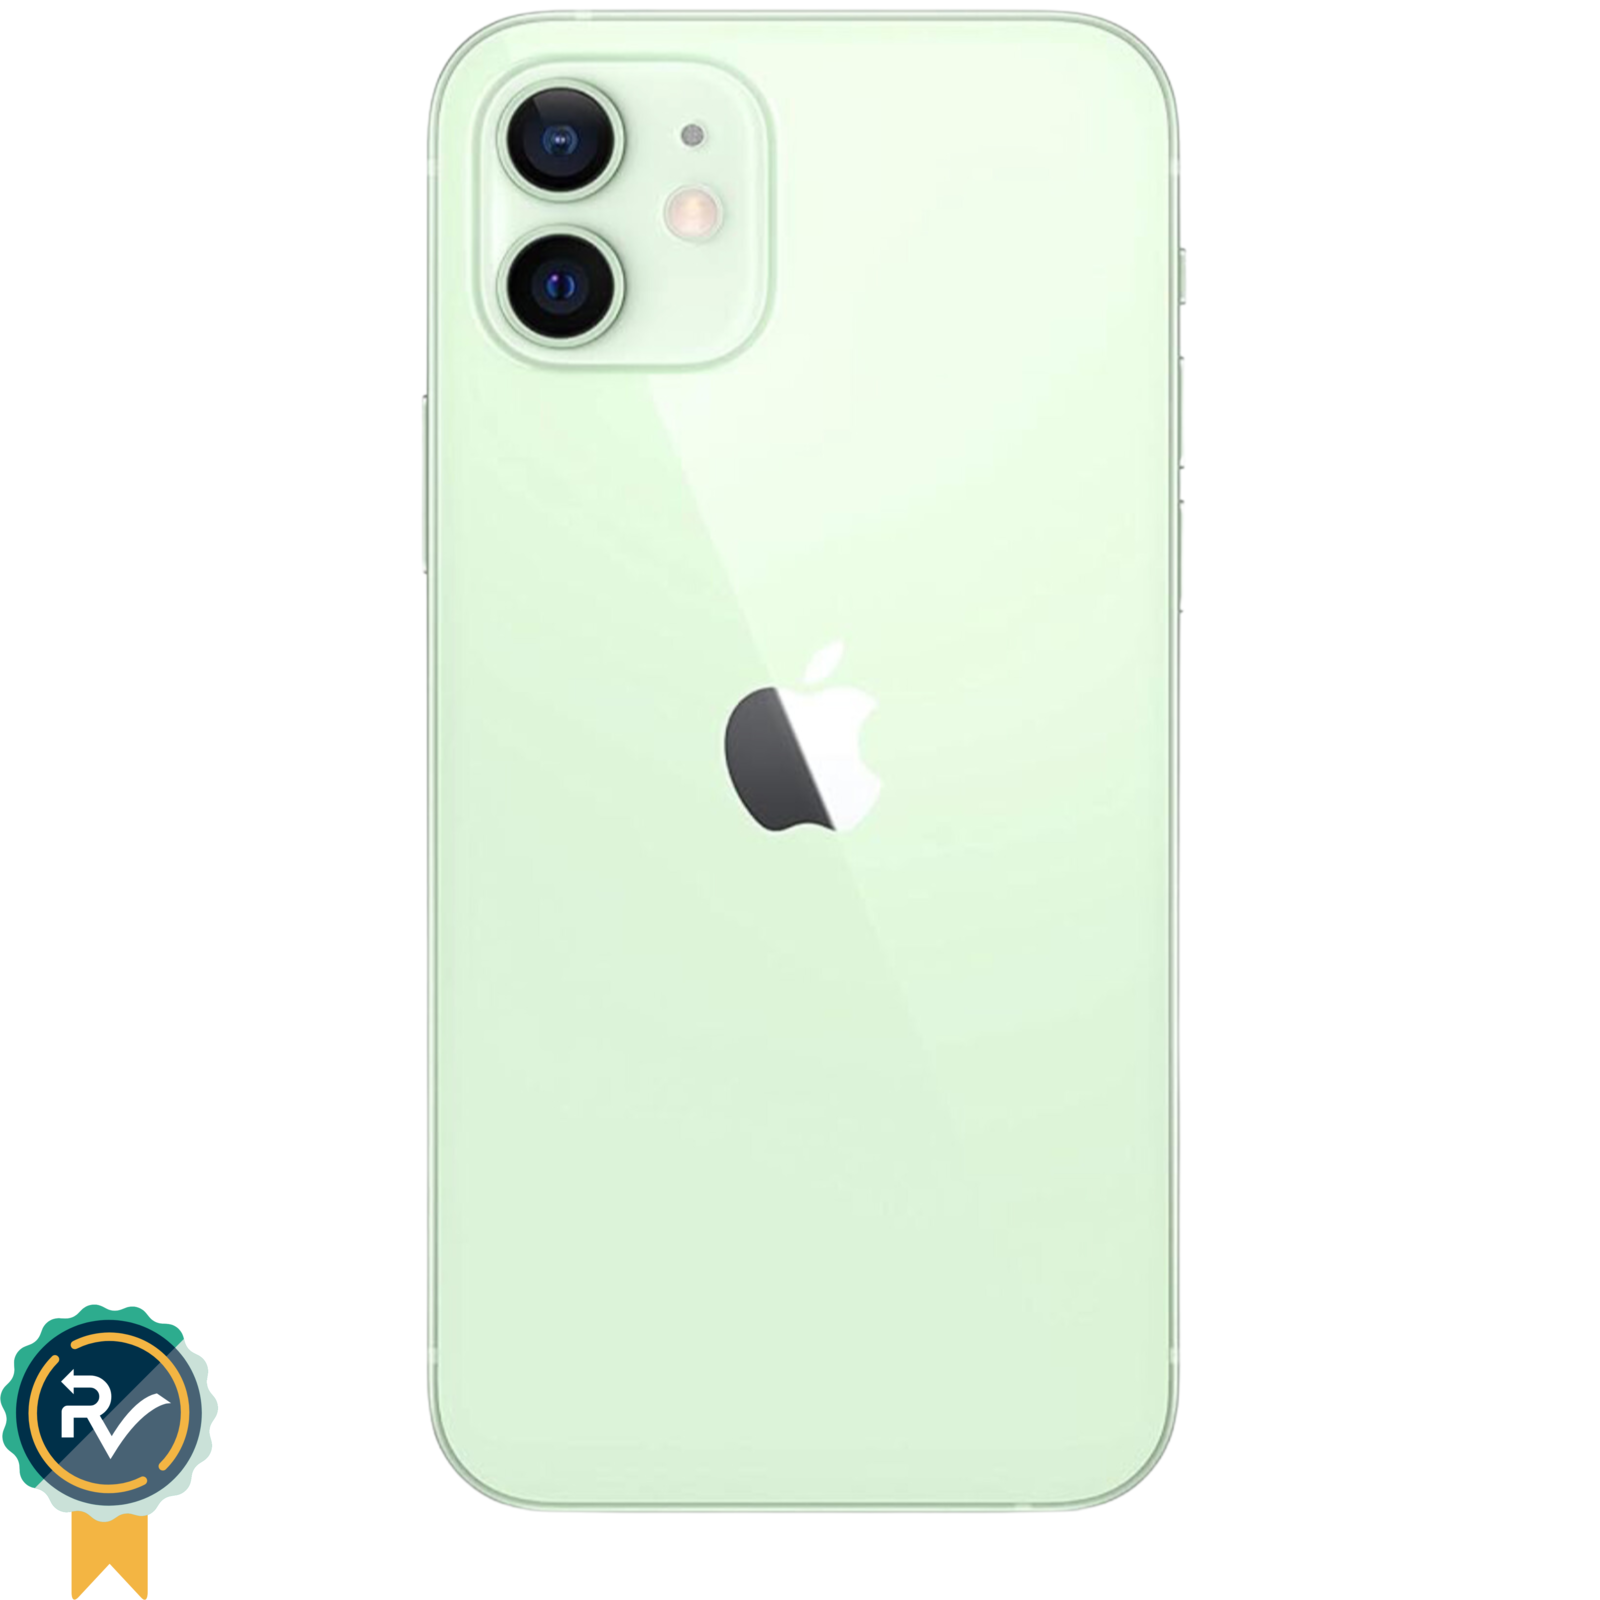 Apple iPhone 12 128GB Groen